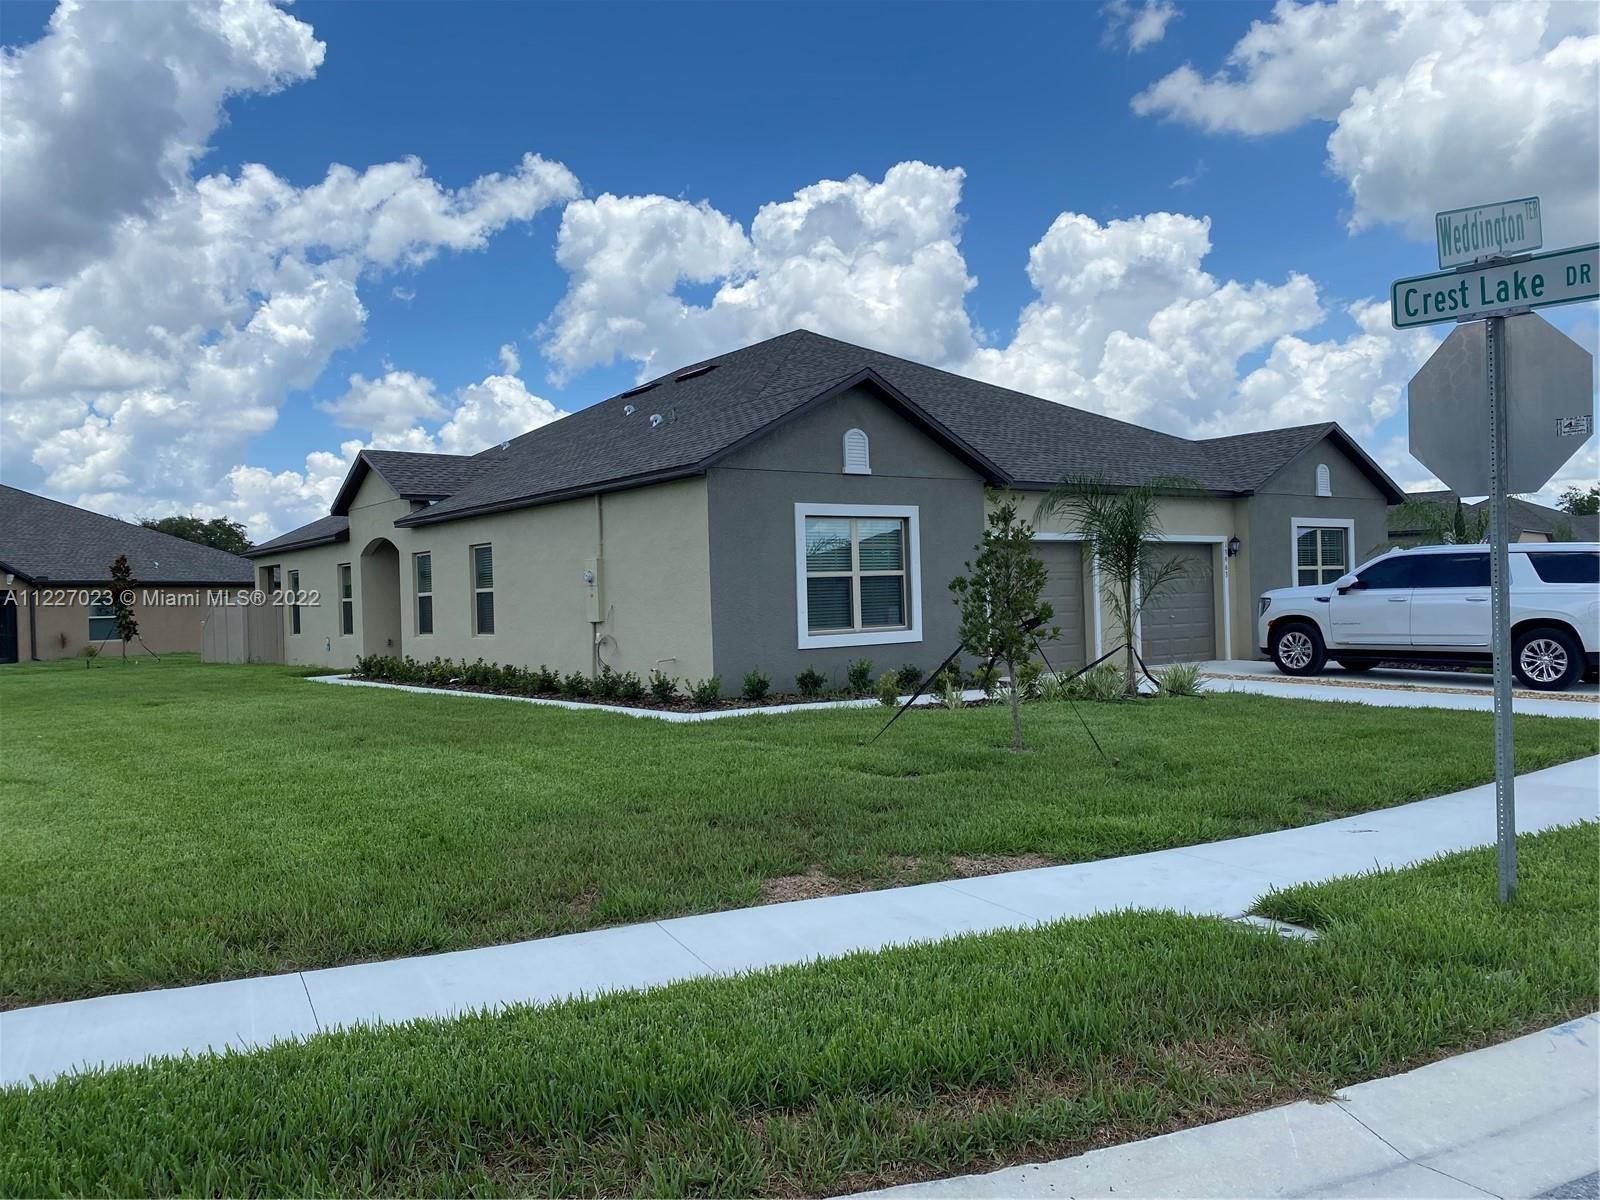 Real estate property located at 13947 Weddington #13947, Pasco County, Hudson, FL